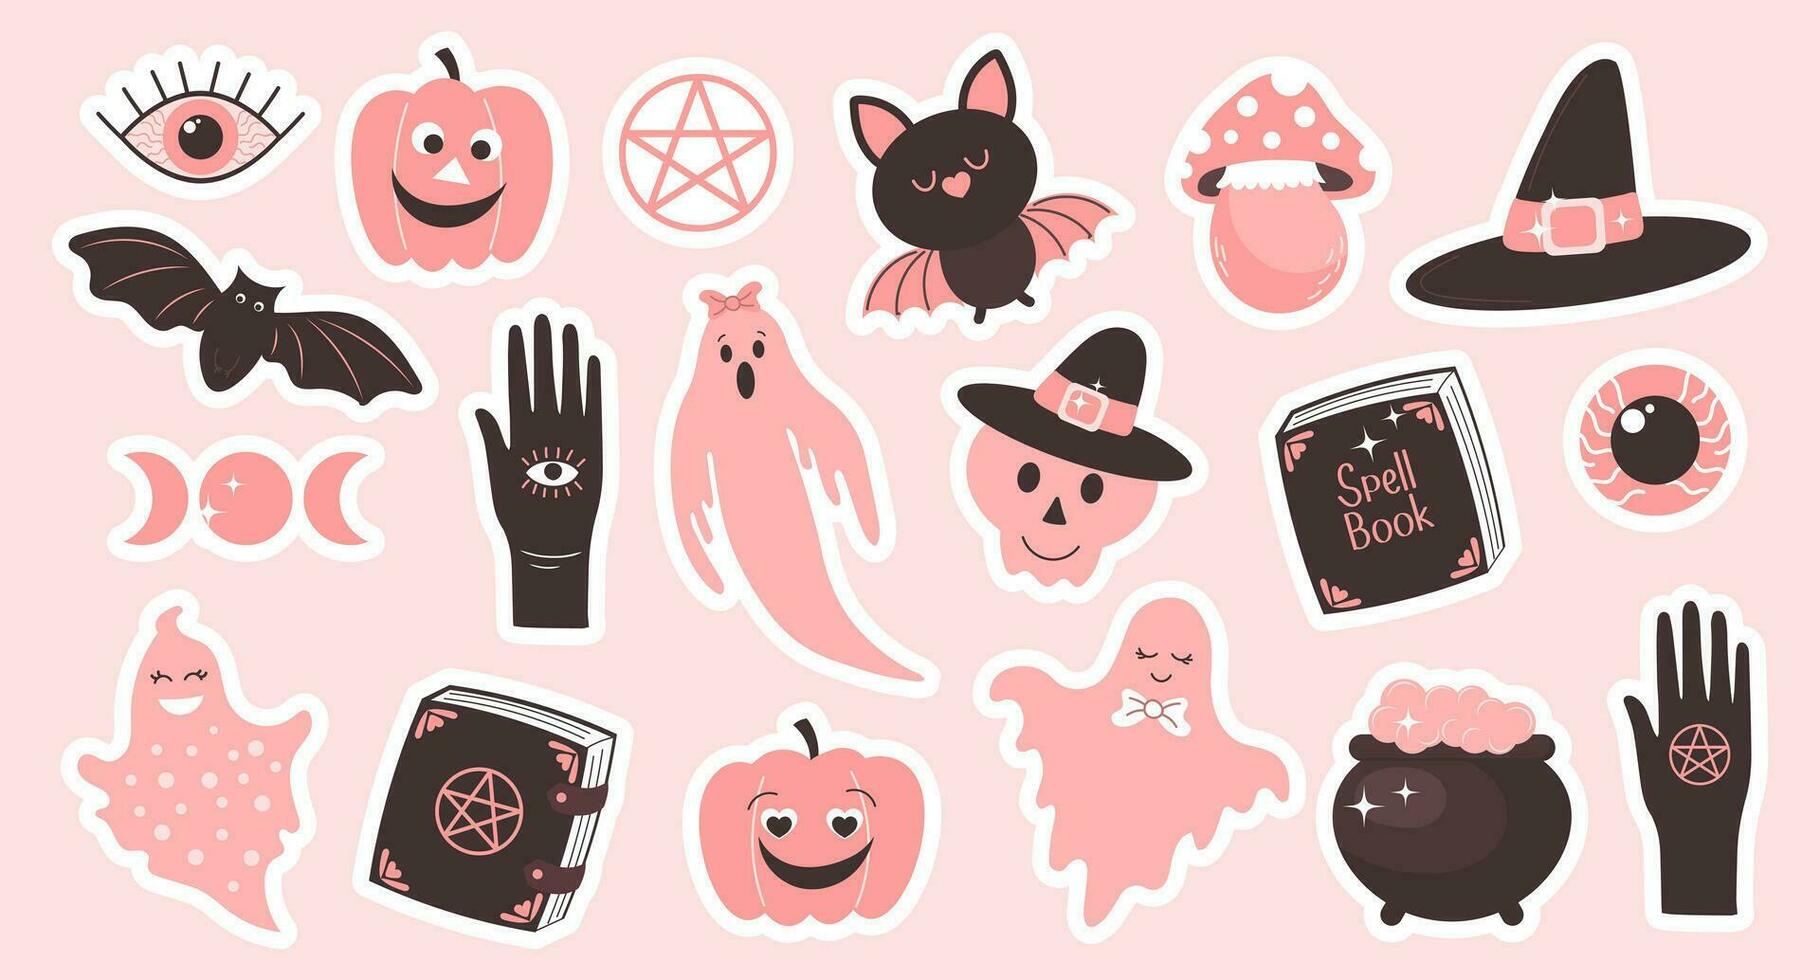 Halloween set with pink elements. Halloween stickers, hand, ghosts, bats, magic pot, moon, pumpkins, eye, spell book and skull. Cartoon design in flat style. Vector